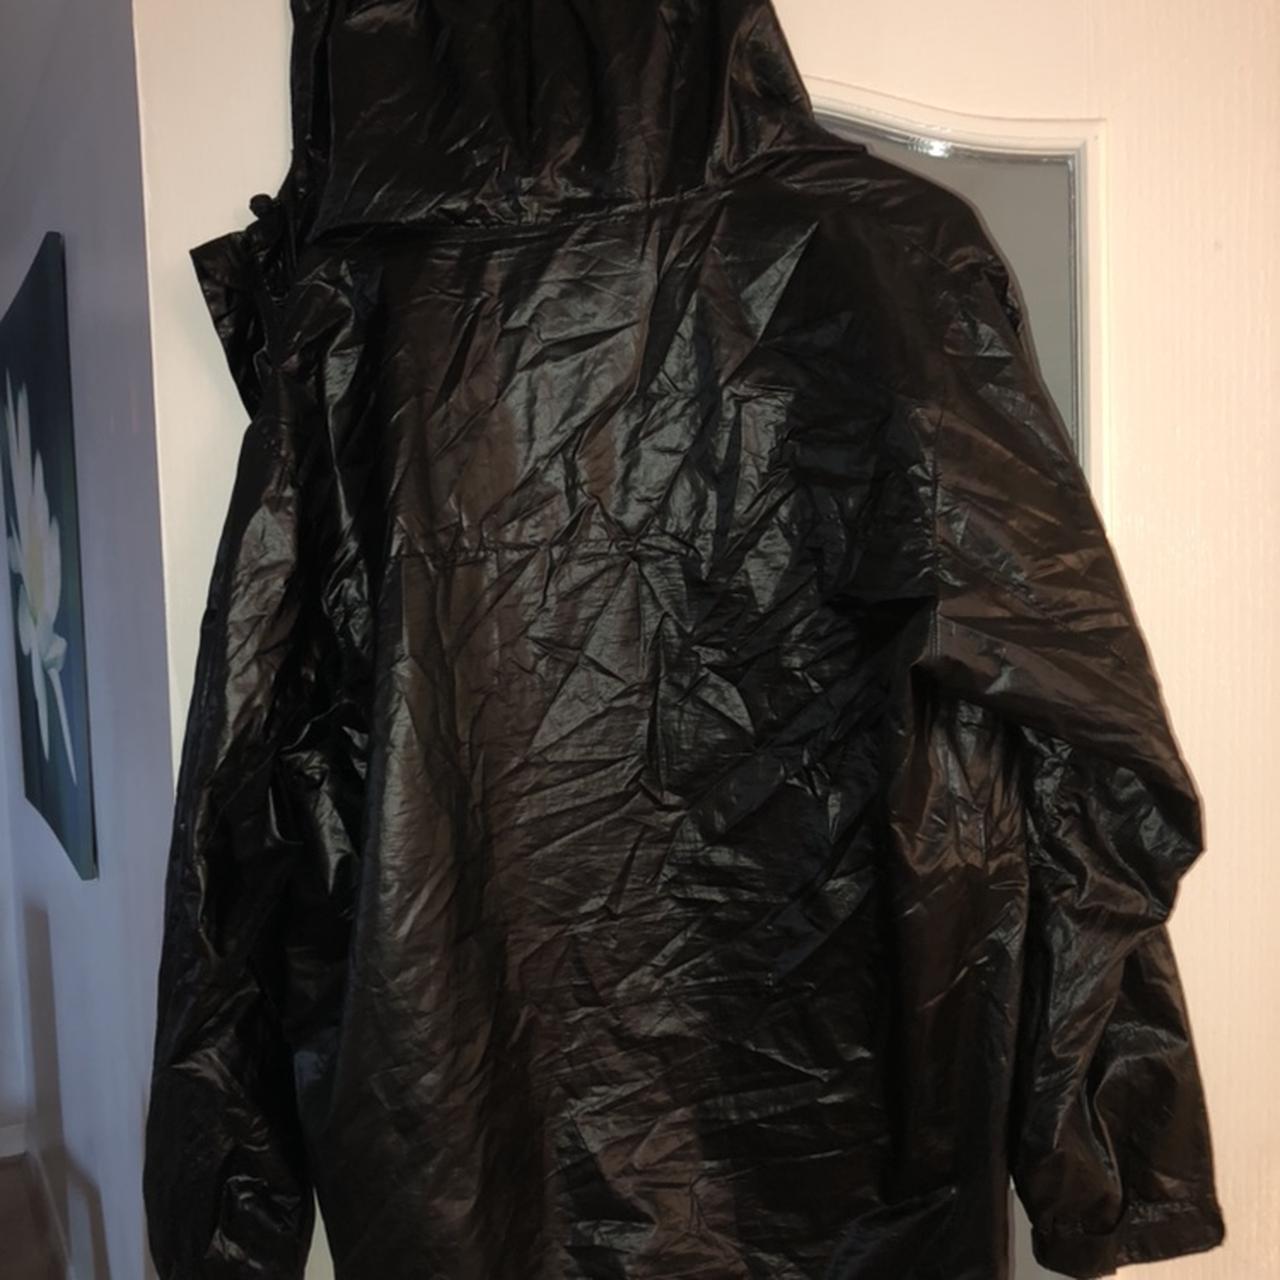 Original 2006 Gio-Goi Black Jacket purchased from... - Depop